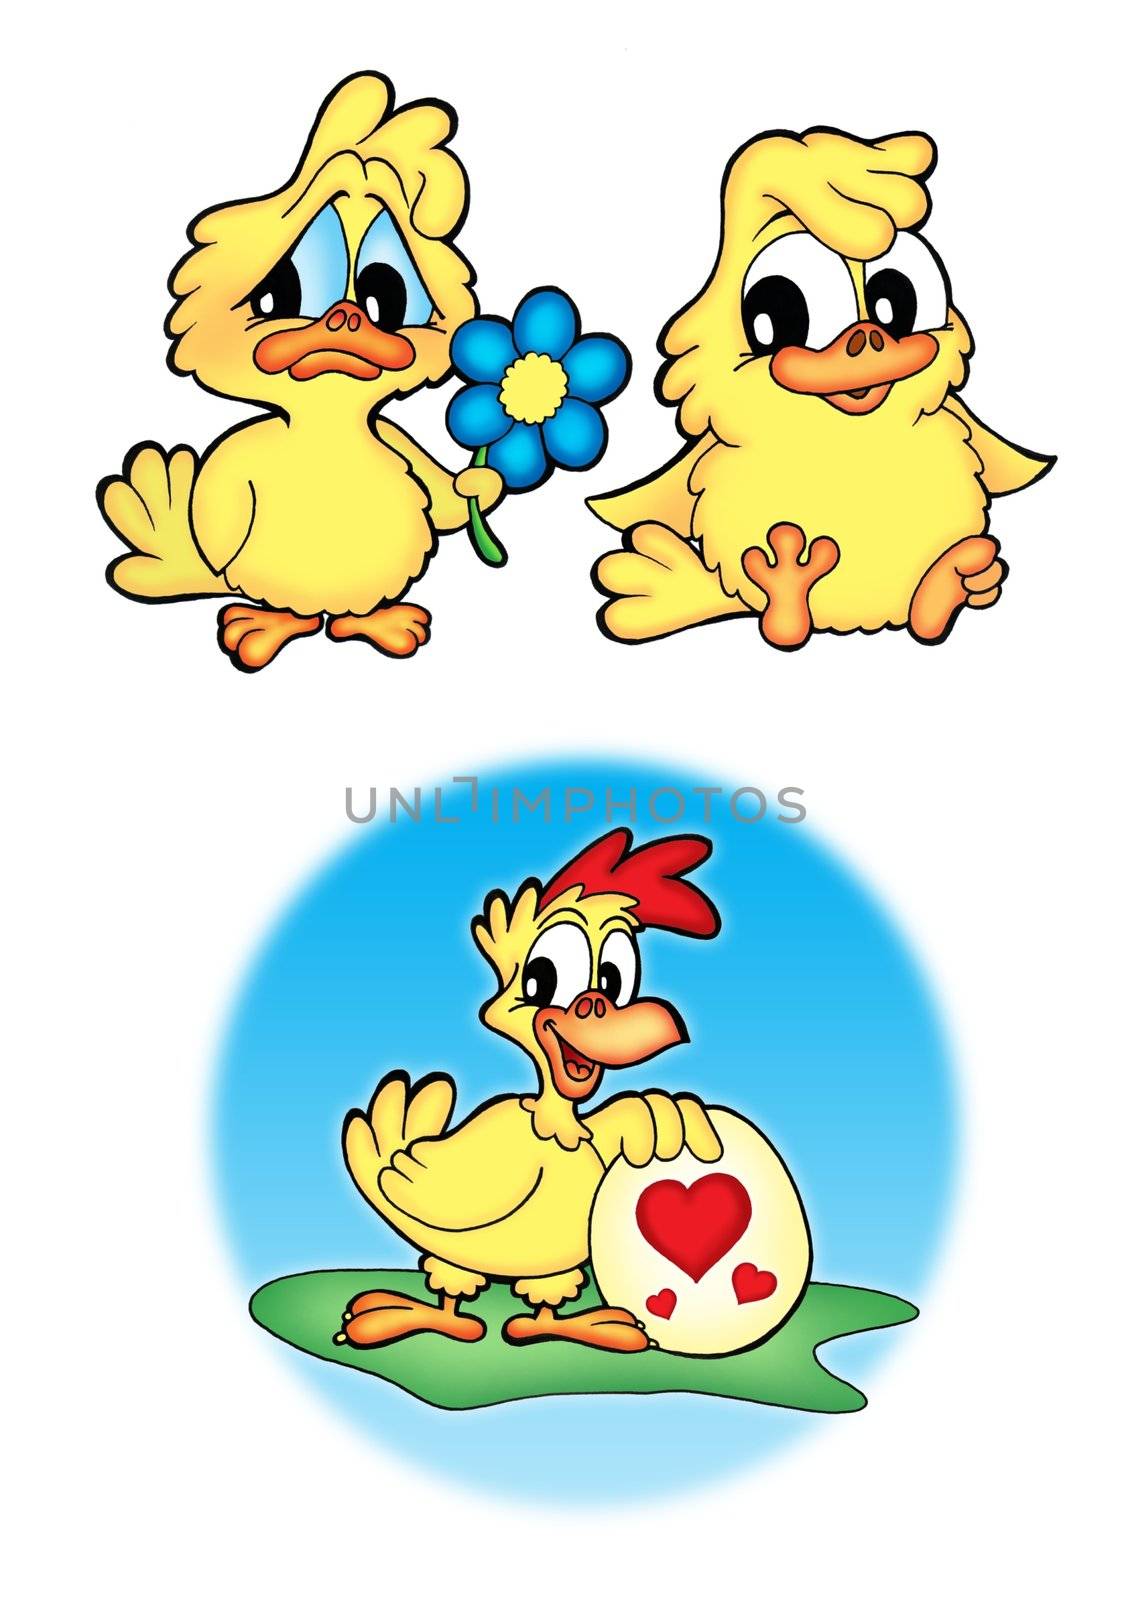 Three cute chickens - color illustration.